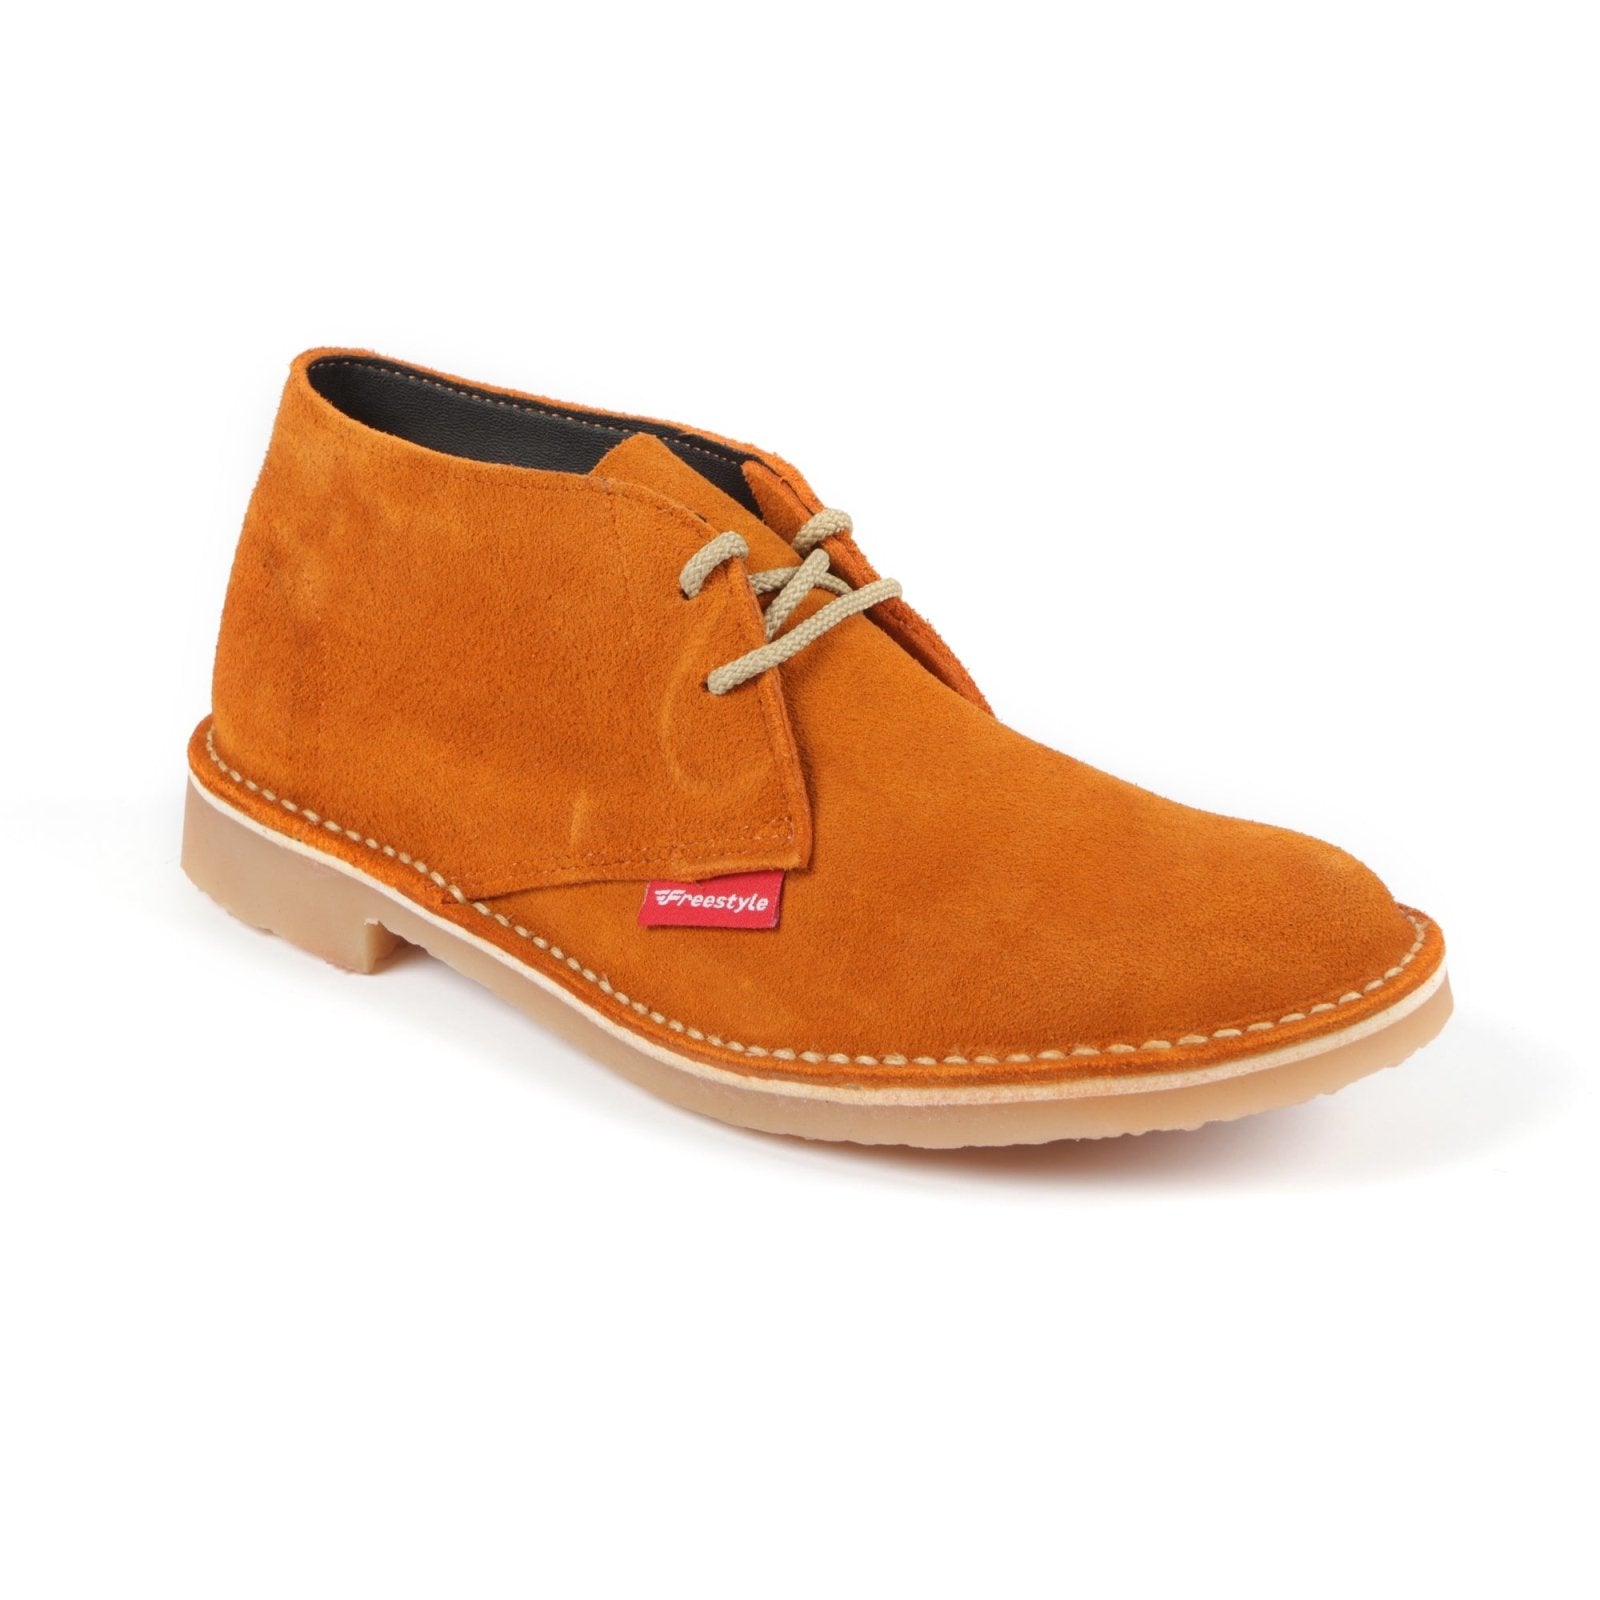 Hunter Vellie Unisex Premium Suede Veldskoen - Bright Orange - Freestyle SA Proudly local leather boots veldskoens vellies leather shoes suede veldskoens